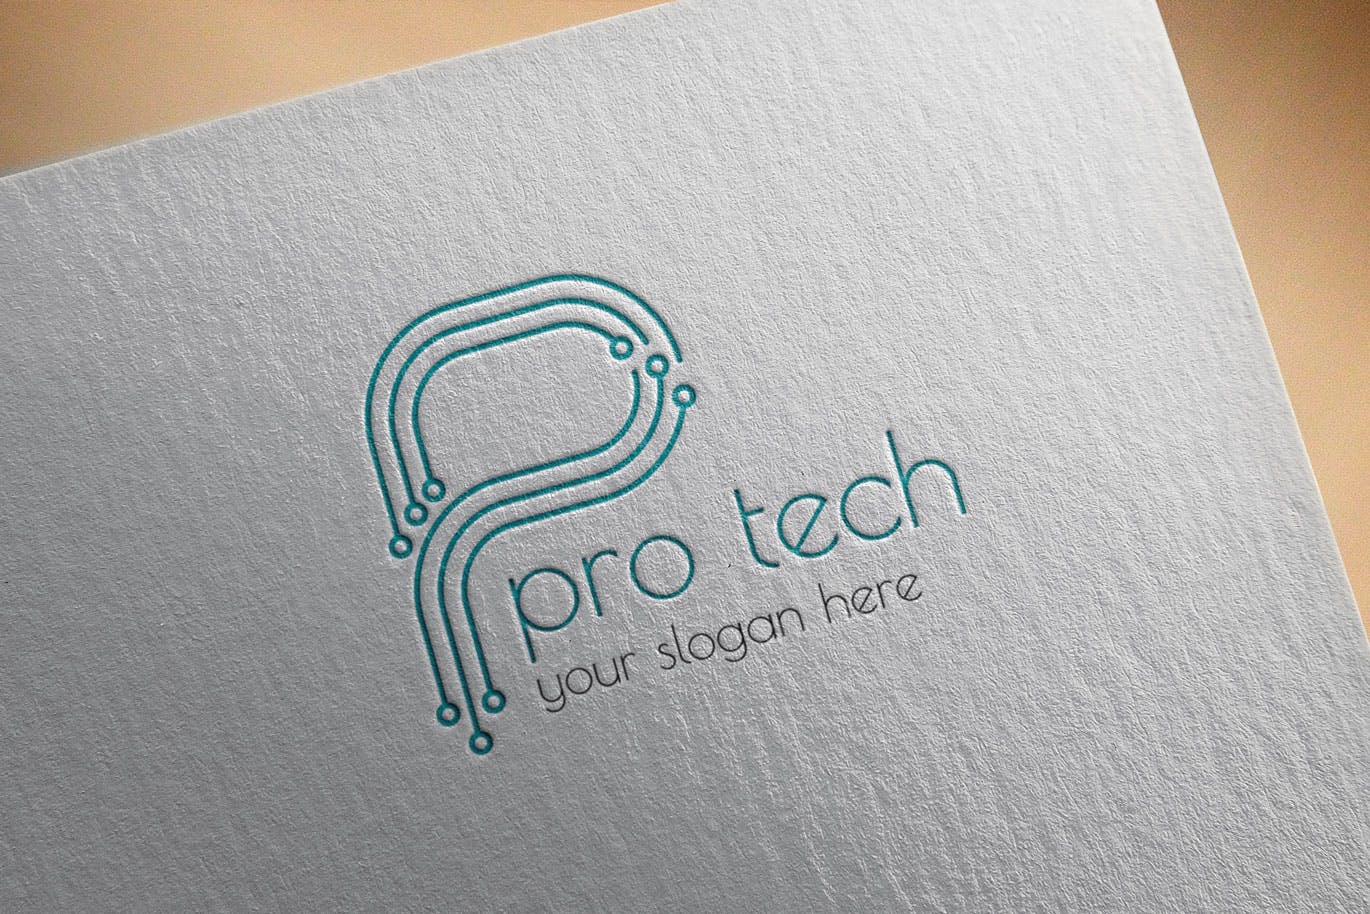 字母P创意图形企业Logo设计蚂蚁素材精选模板 Letter Based Business Logo Template插图(2)